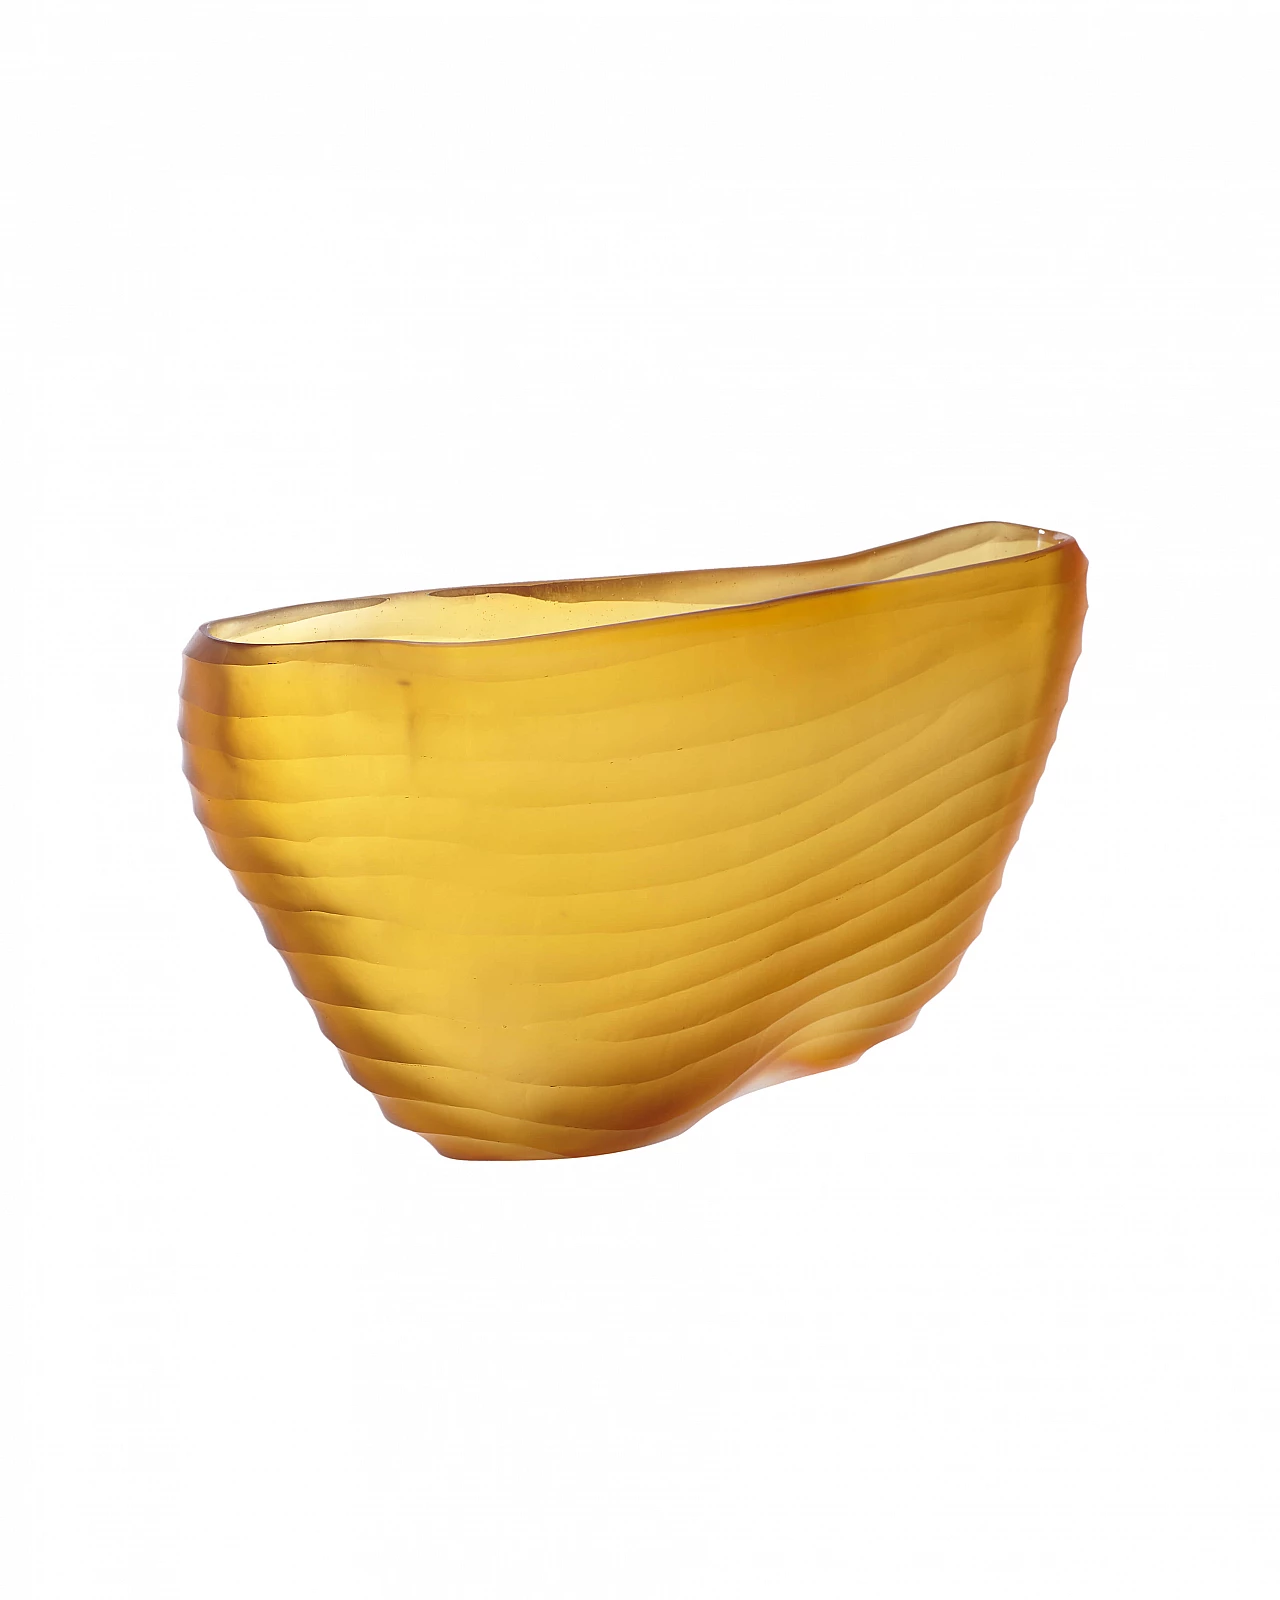 Beveled Murano glass vase by Micheluzzi 1249950